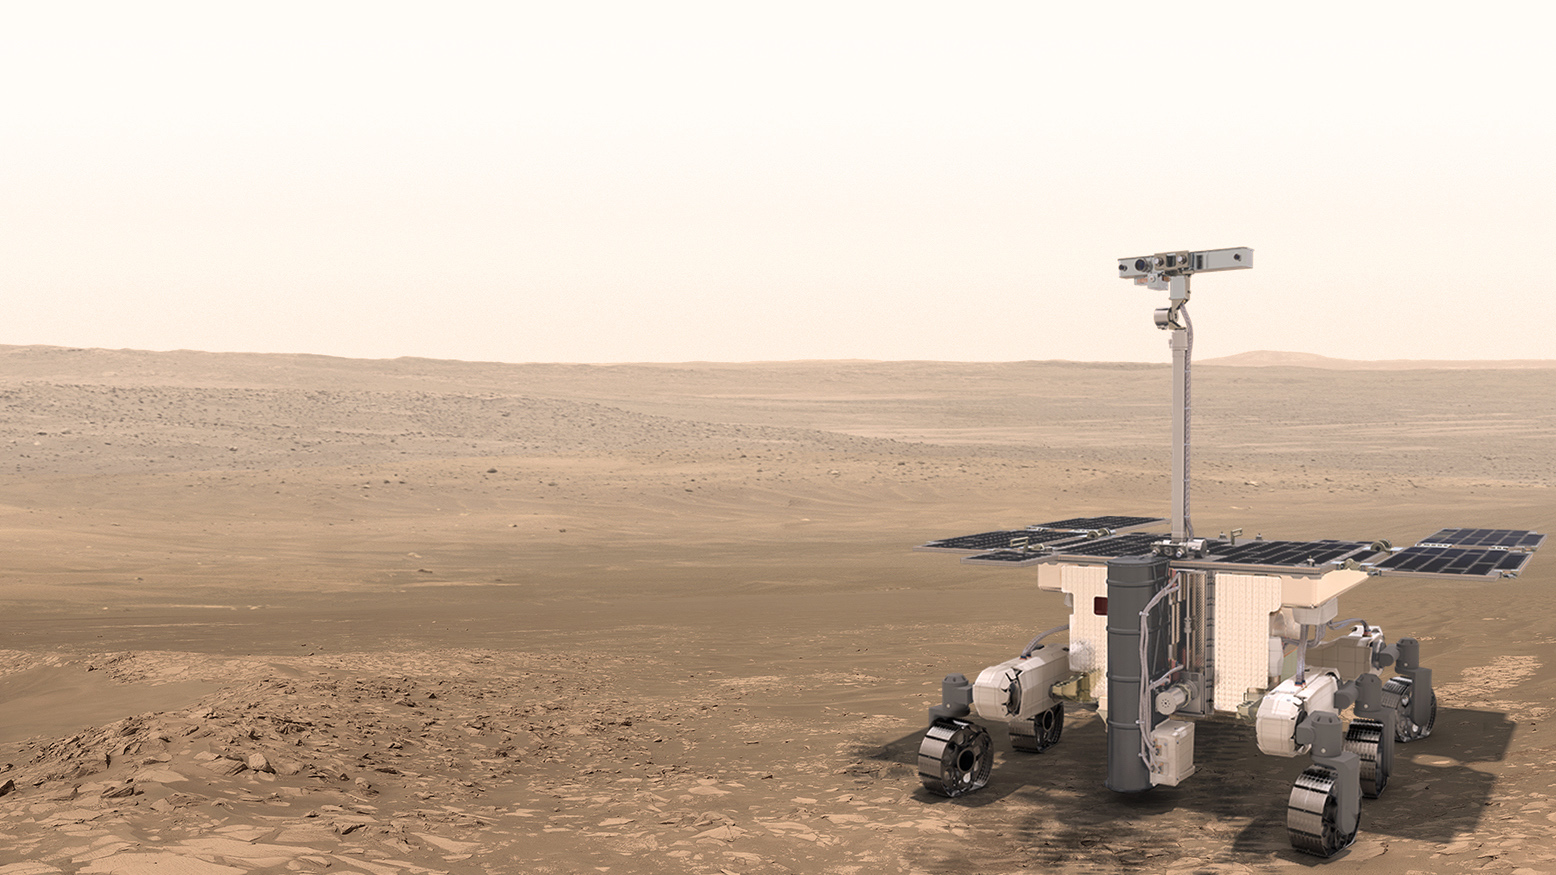 The European ExoMars rover may reach Mars in 2028.